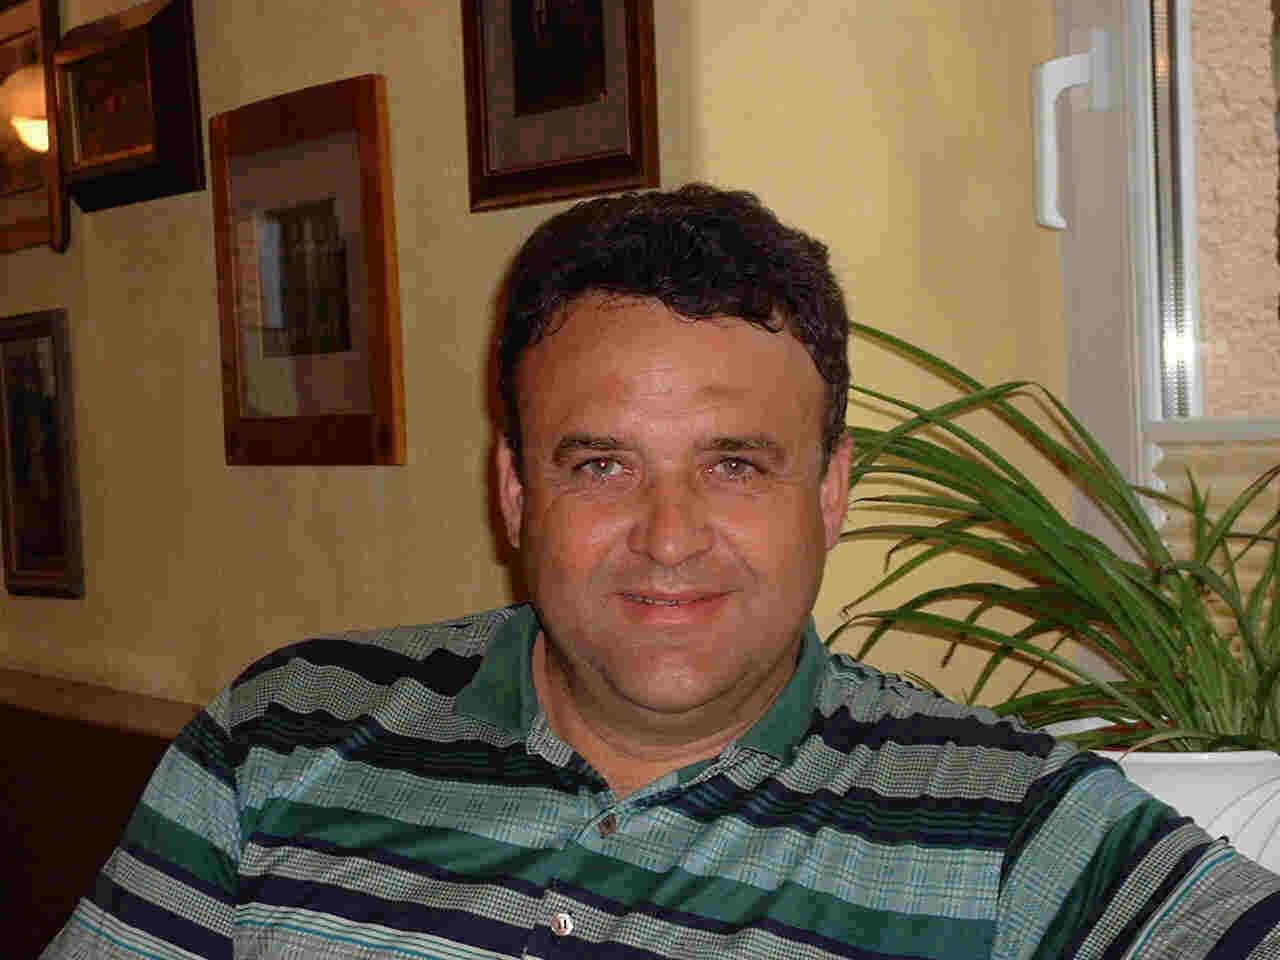 Jurij Matjaz, proprietor